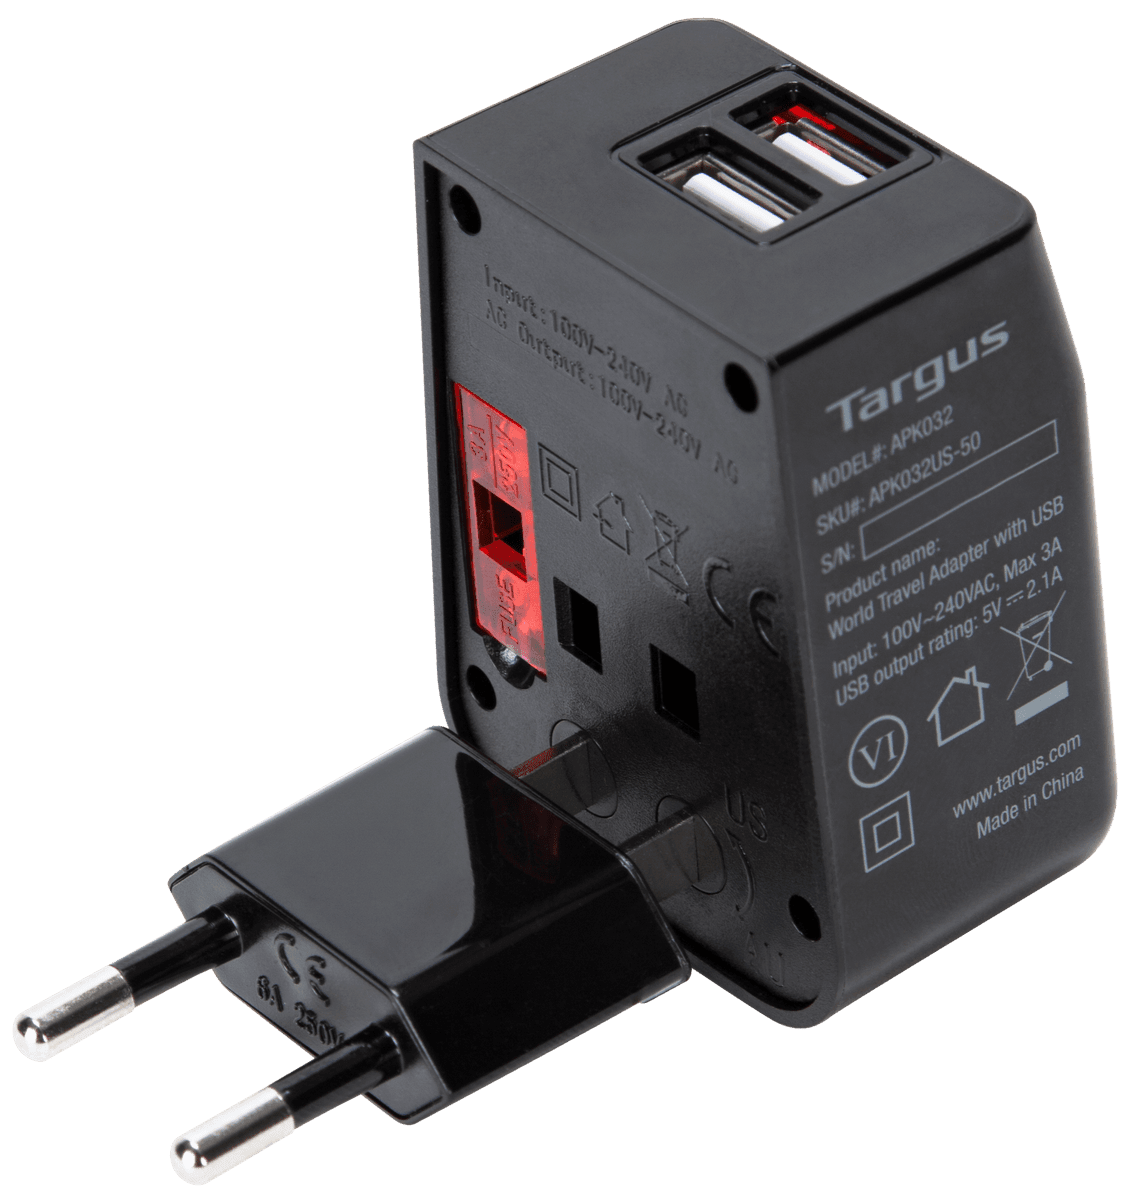 World Power Travel Adapter - APK01US1: Power: Accessories: Targus